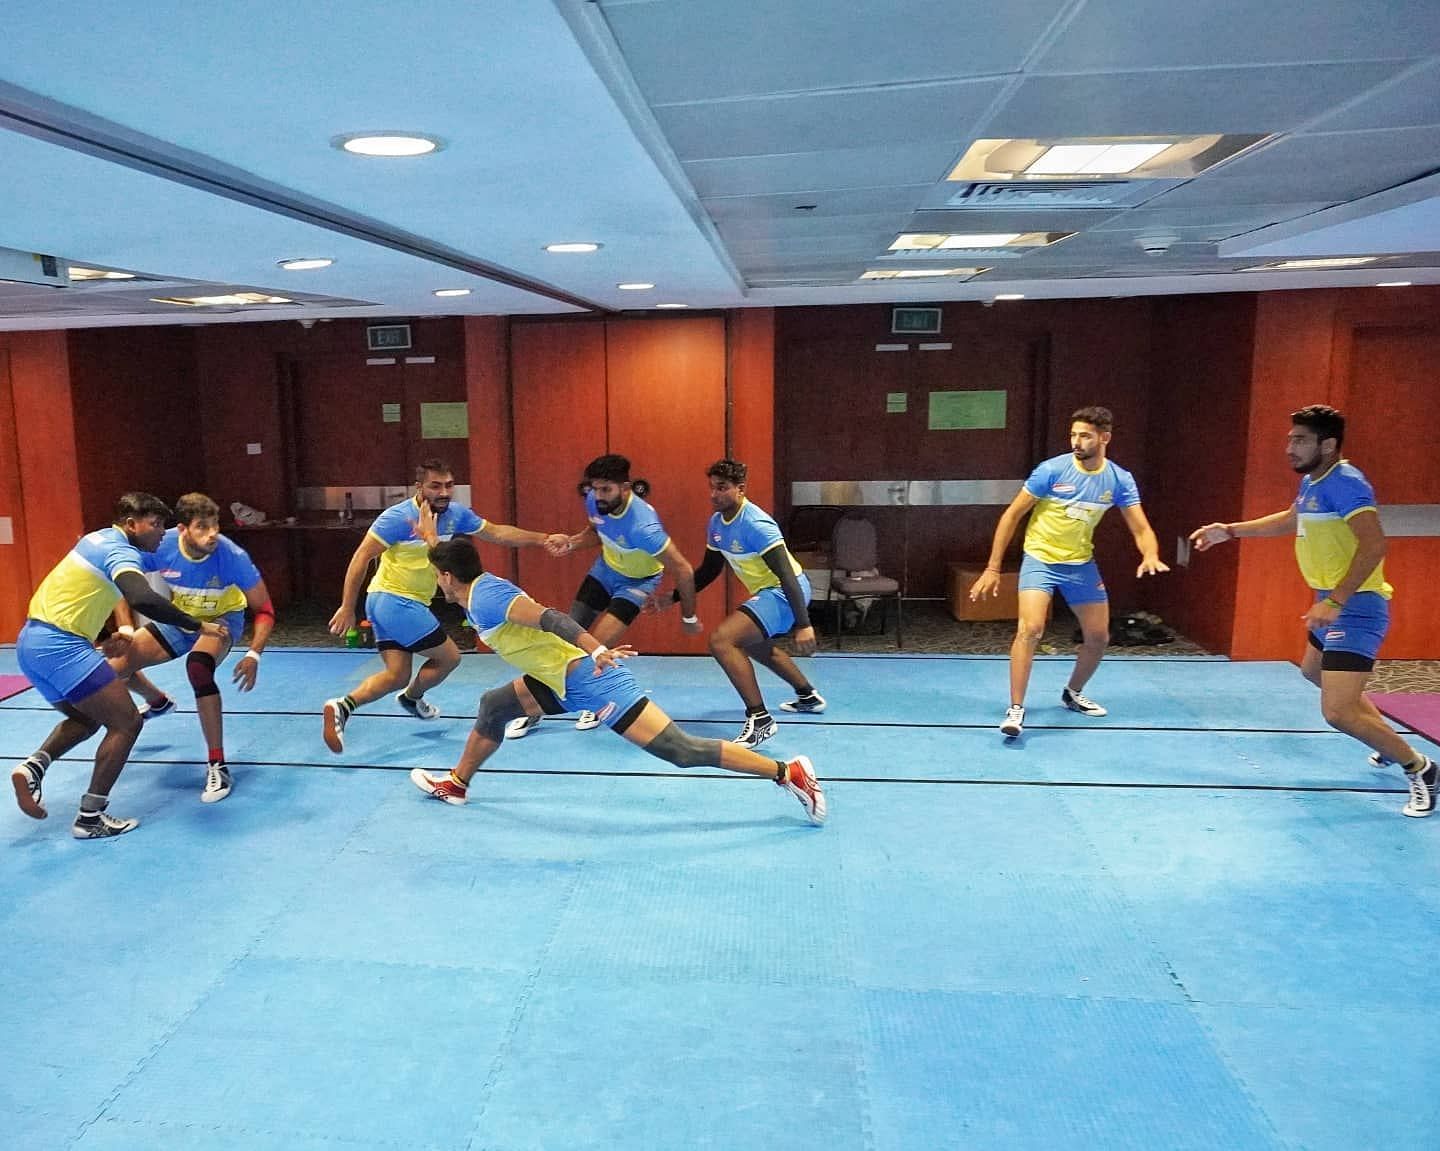 The Tamil Thalaivas players train ahead of the season - Image Courtesy: Twitter